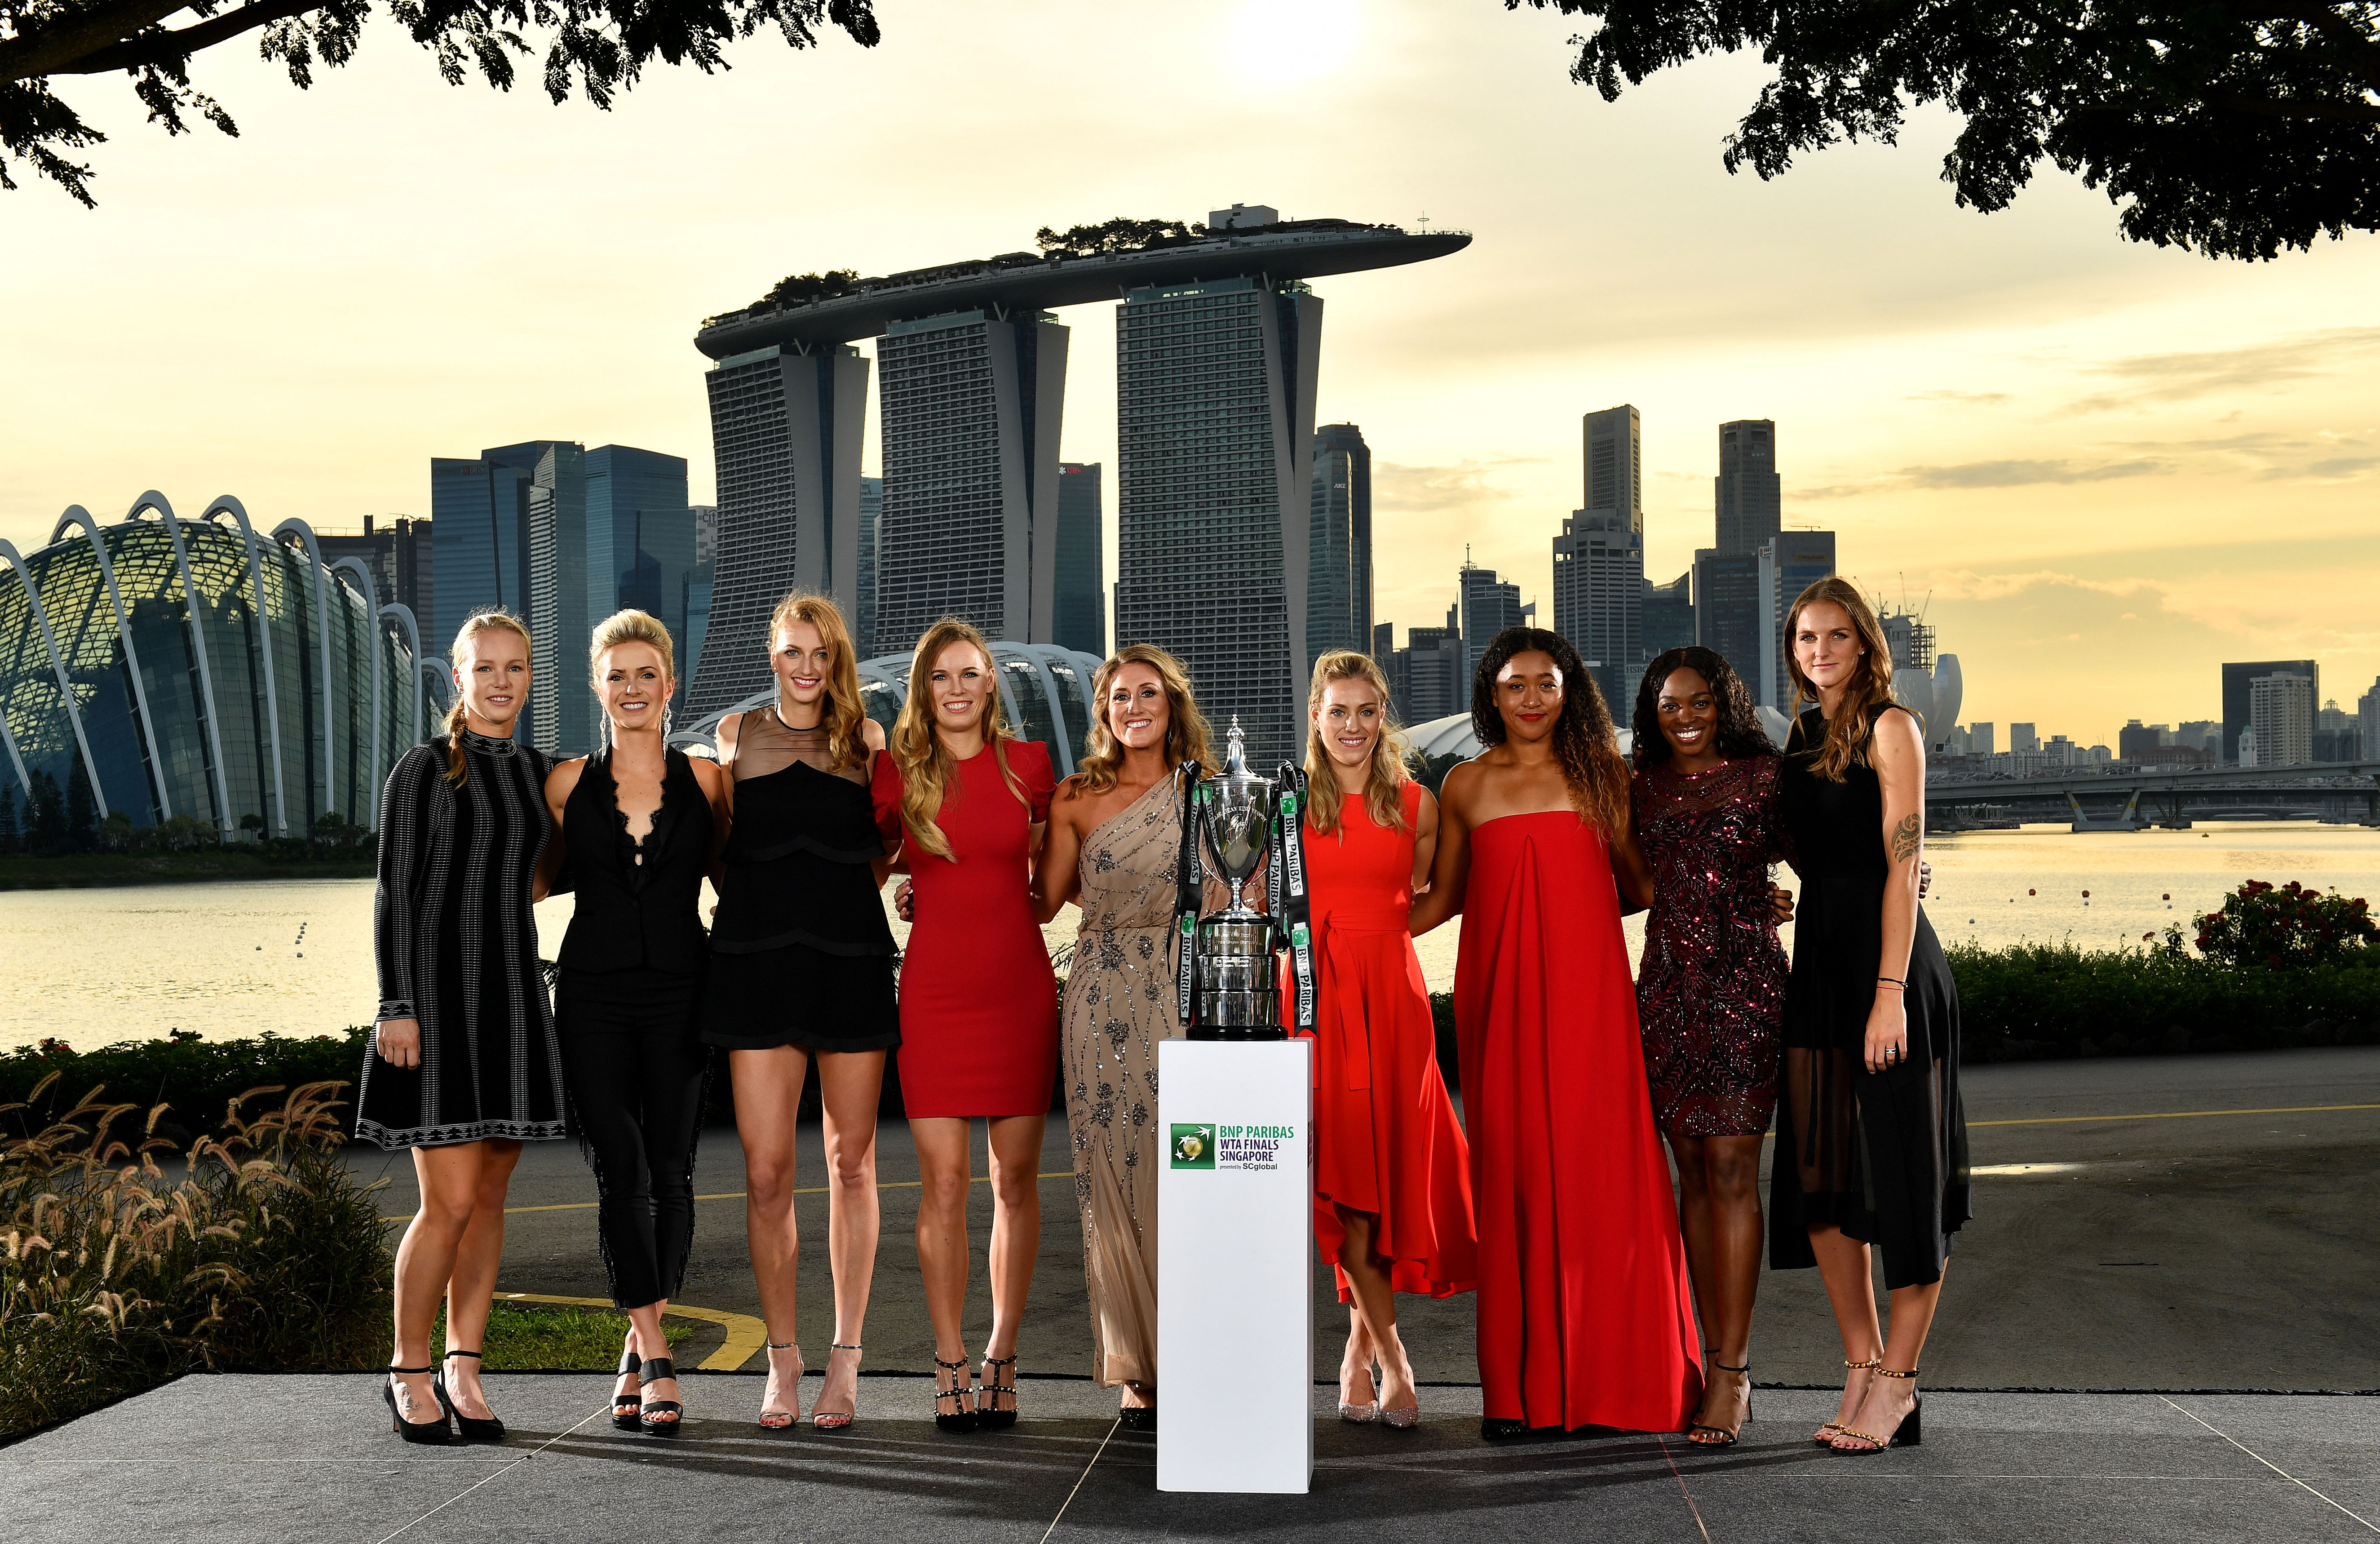 Final 8 @ WTA Finals Singapore 2018